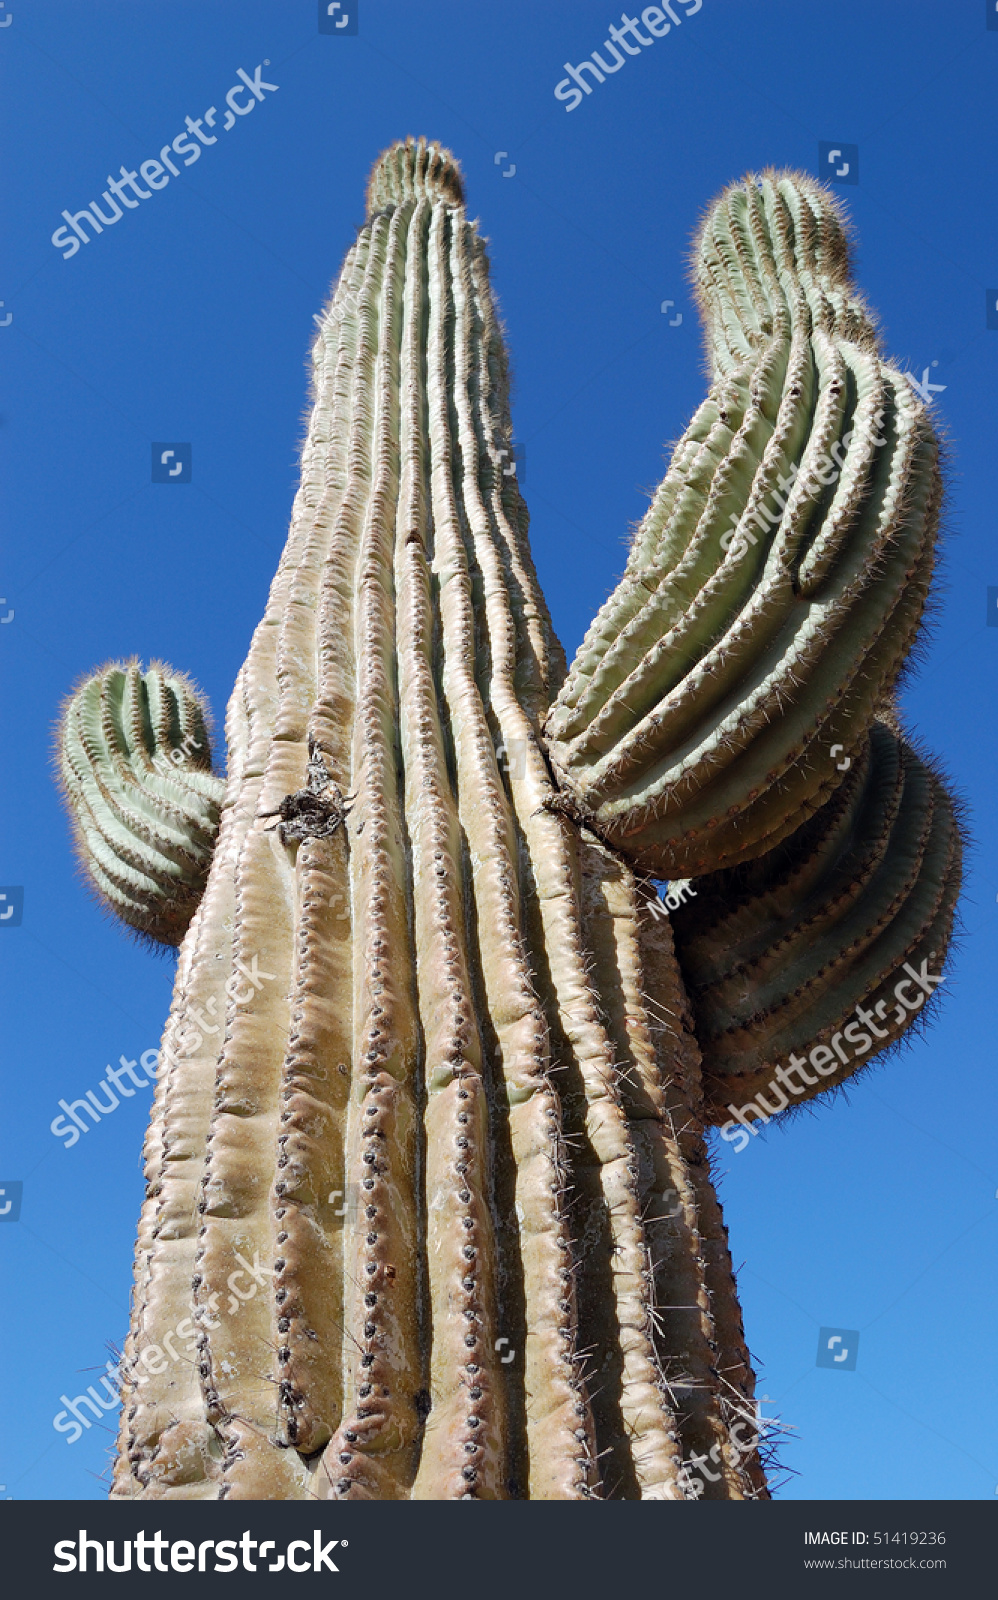 Giant Cactus In Arizona Desert Stock Photo 51419236 : Shutterstock